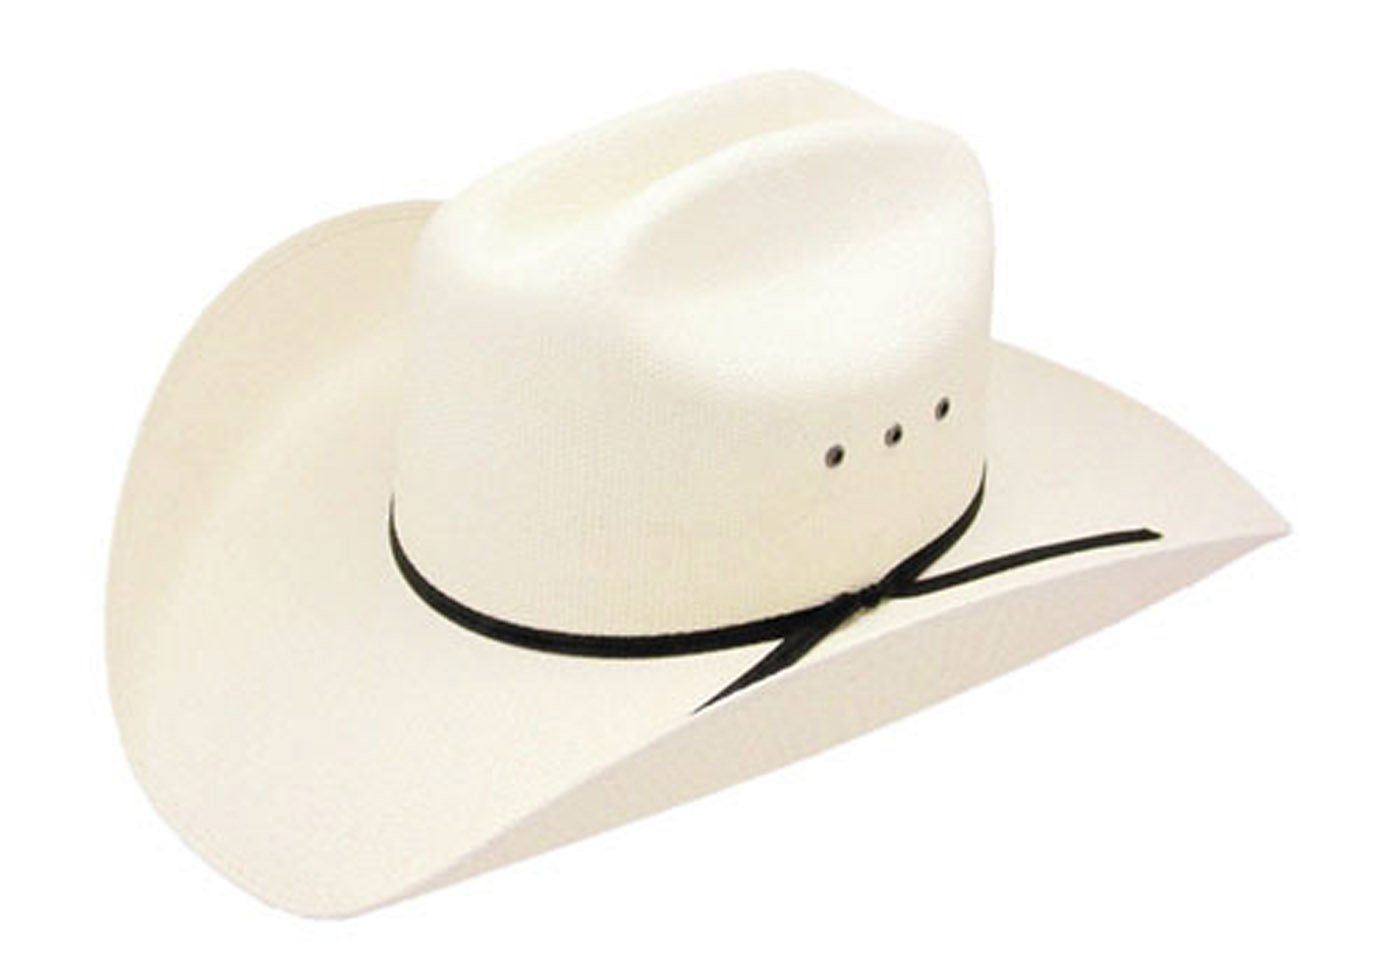 Resistol Denison - (7X) Bangora Straw Cowboy Hat